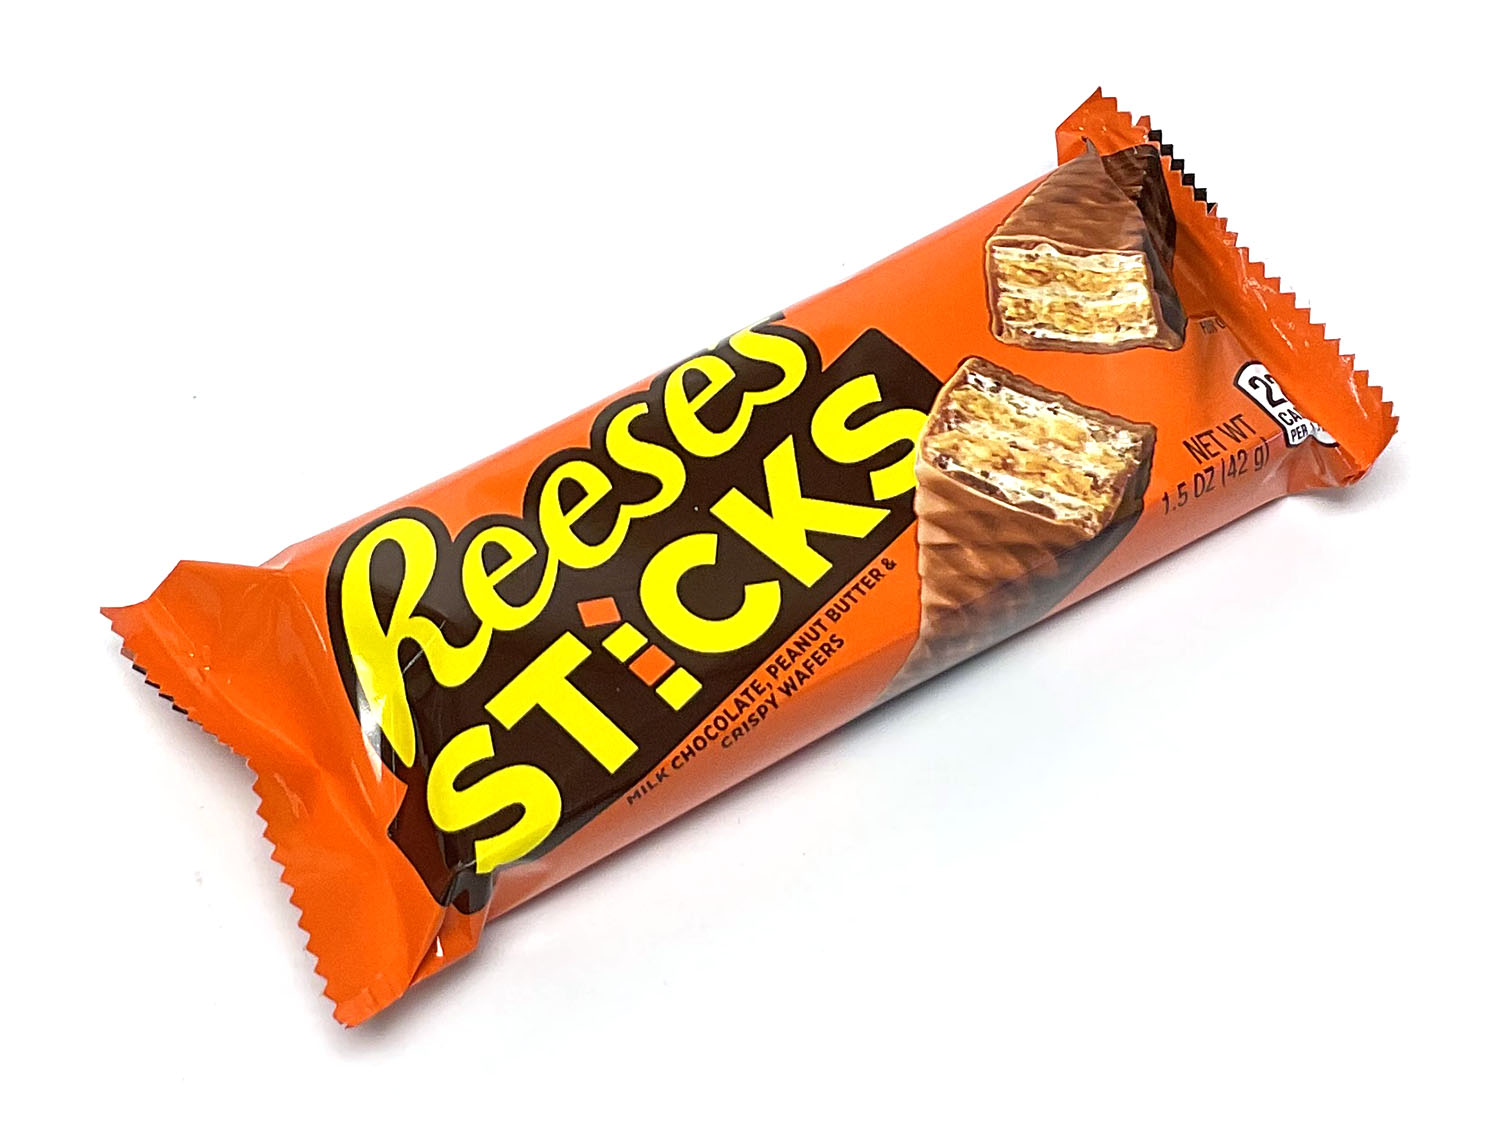 Reese's Sticks - 1.5 oz pack